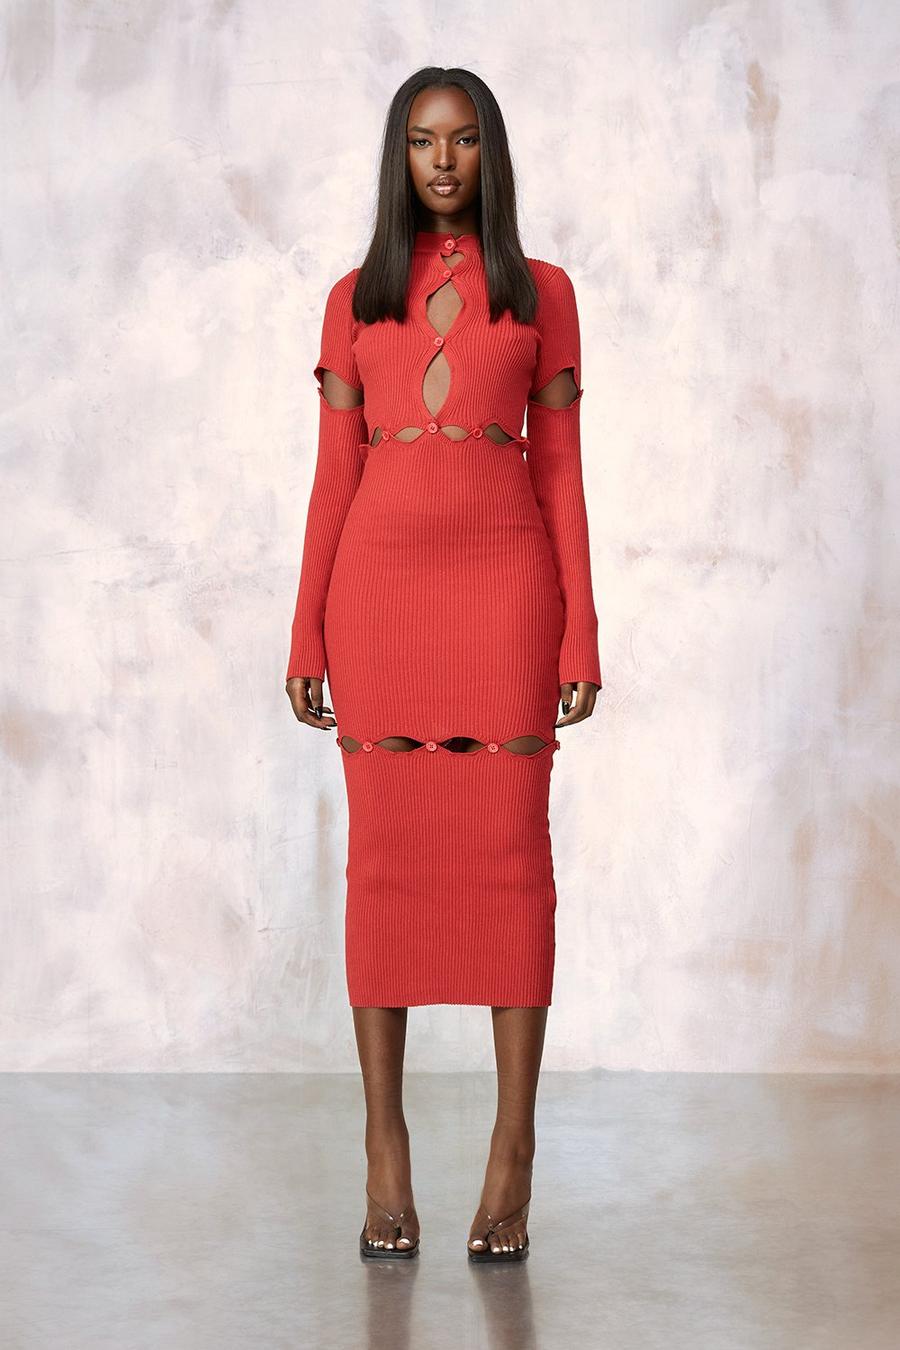 Red Kourtney Kardashian Barker Multiway Knitted Dress